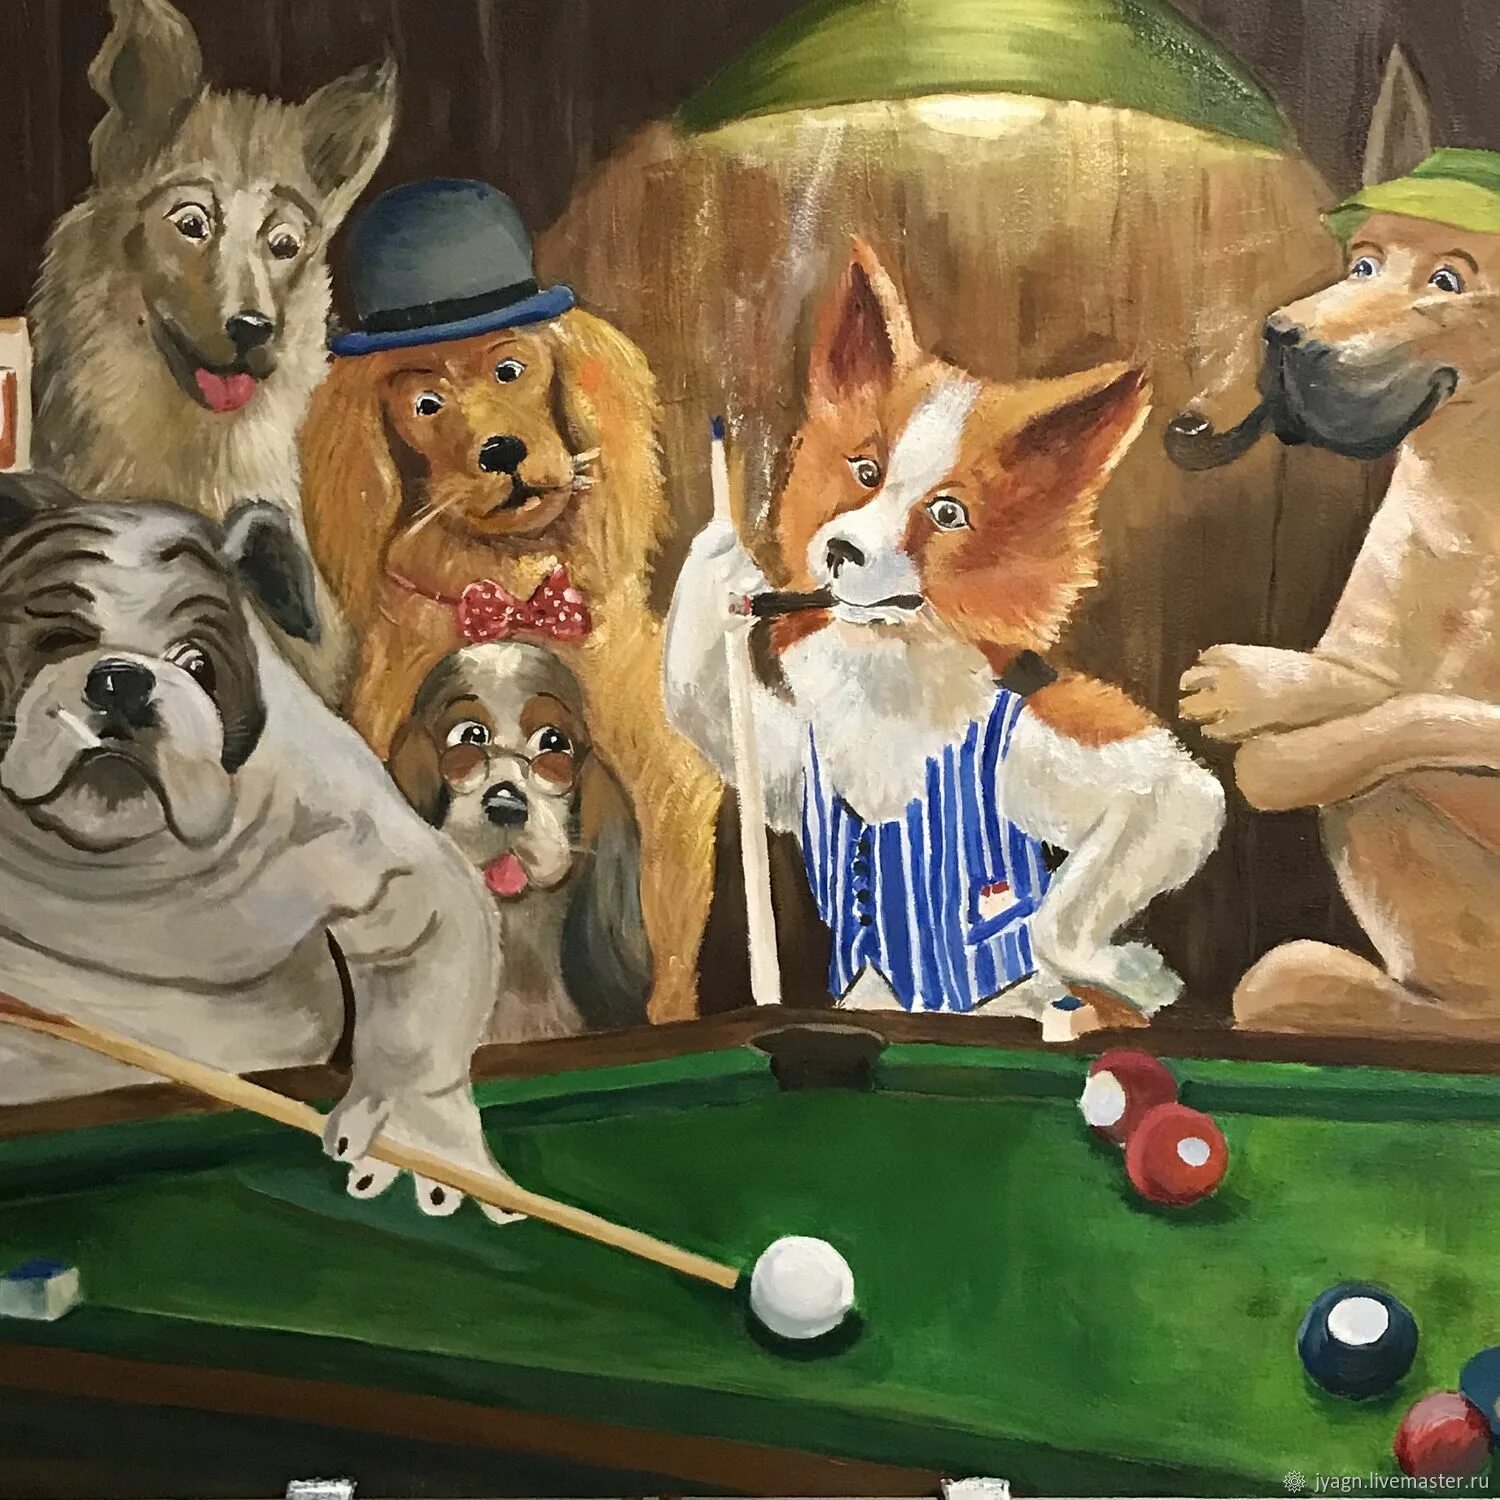 Собаки играют в покер кулидж. Кассиус Кулидж собаки. Кассиус Кулидж собаки бильярд. Кассиуса Кулиджа картины. Кассиус Кулидж собаки картины.